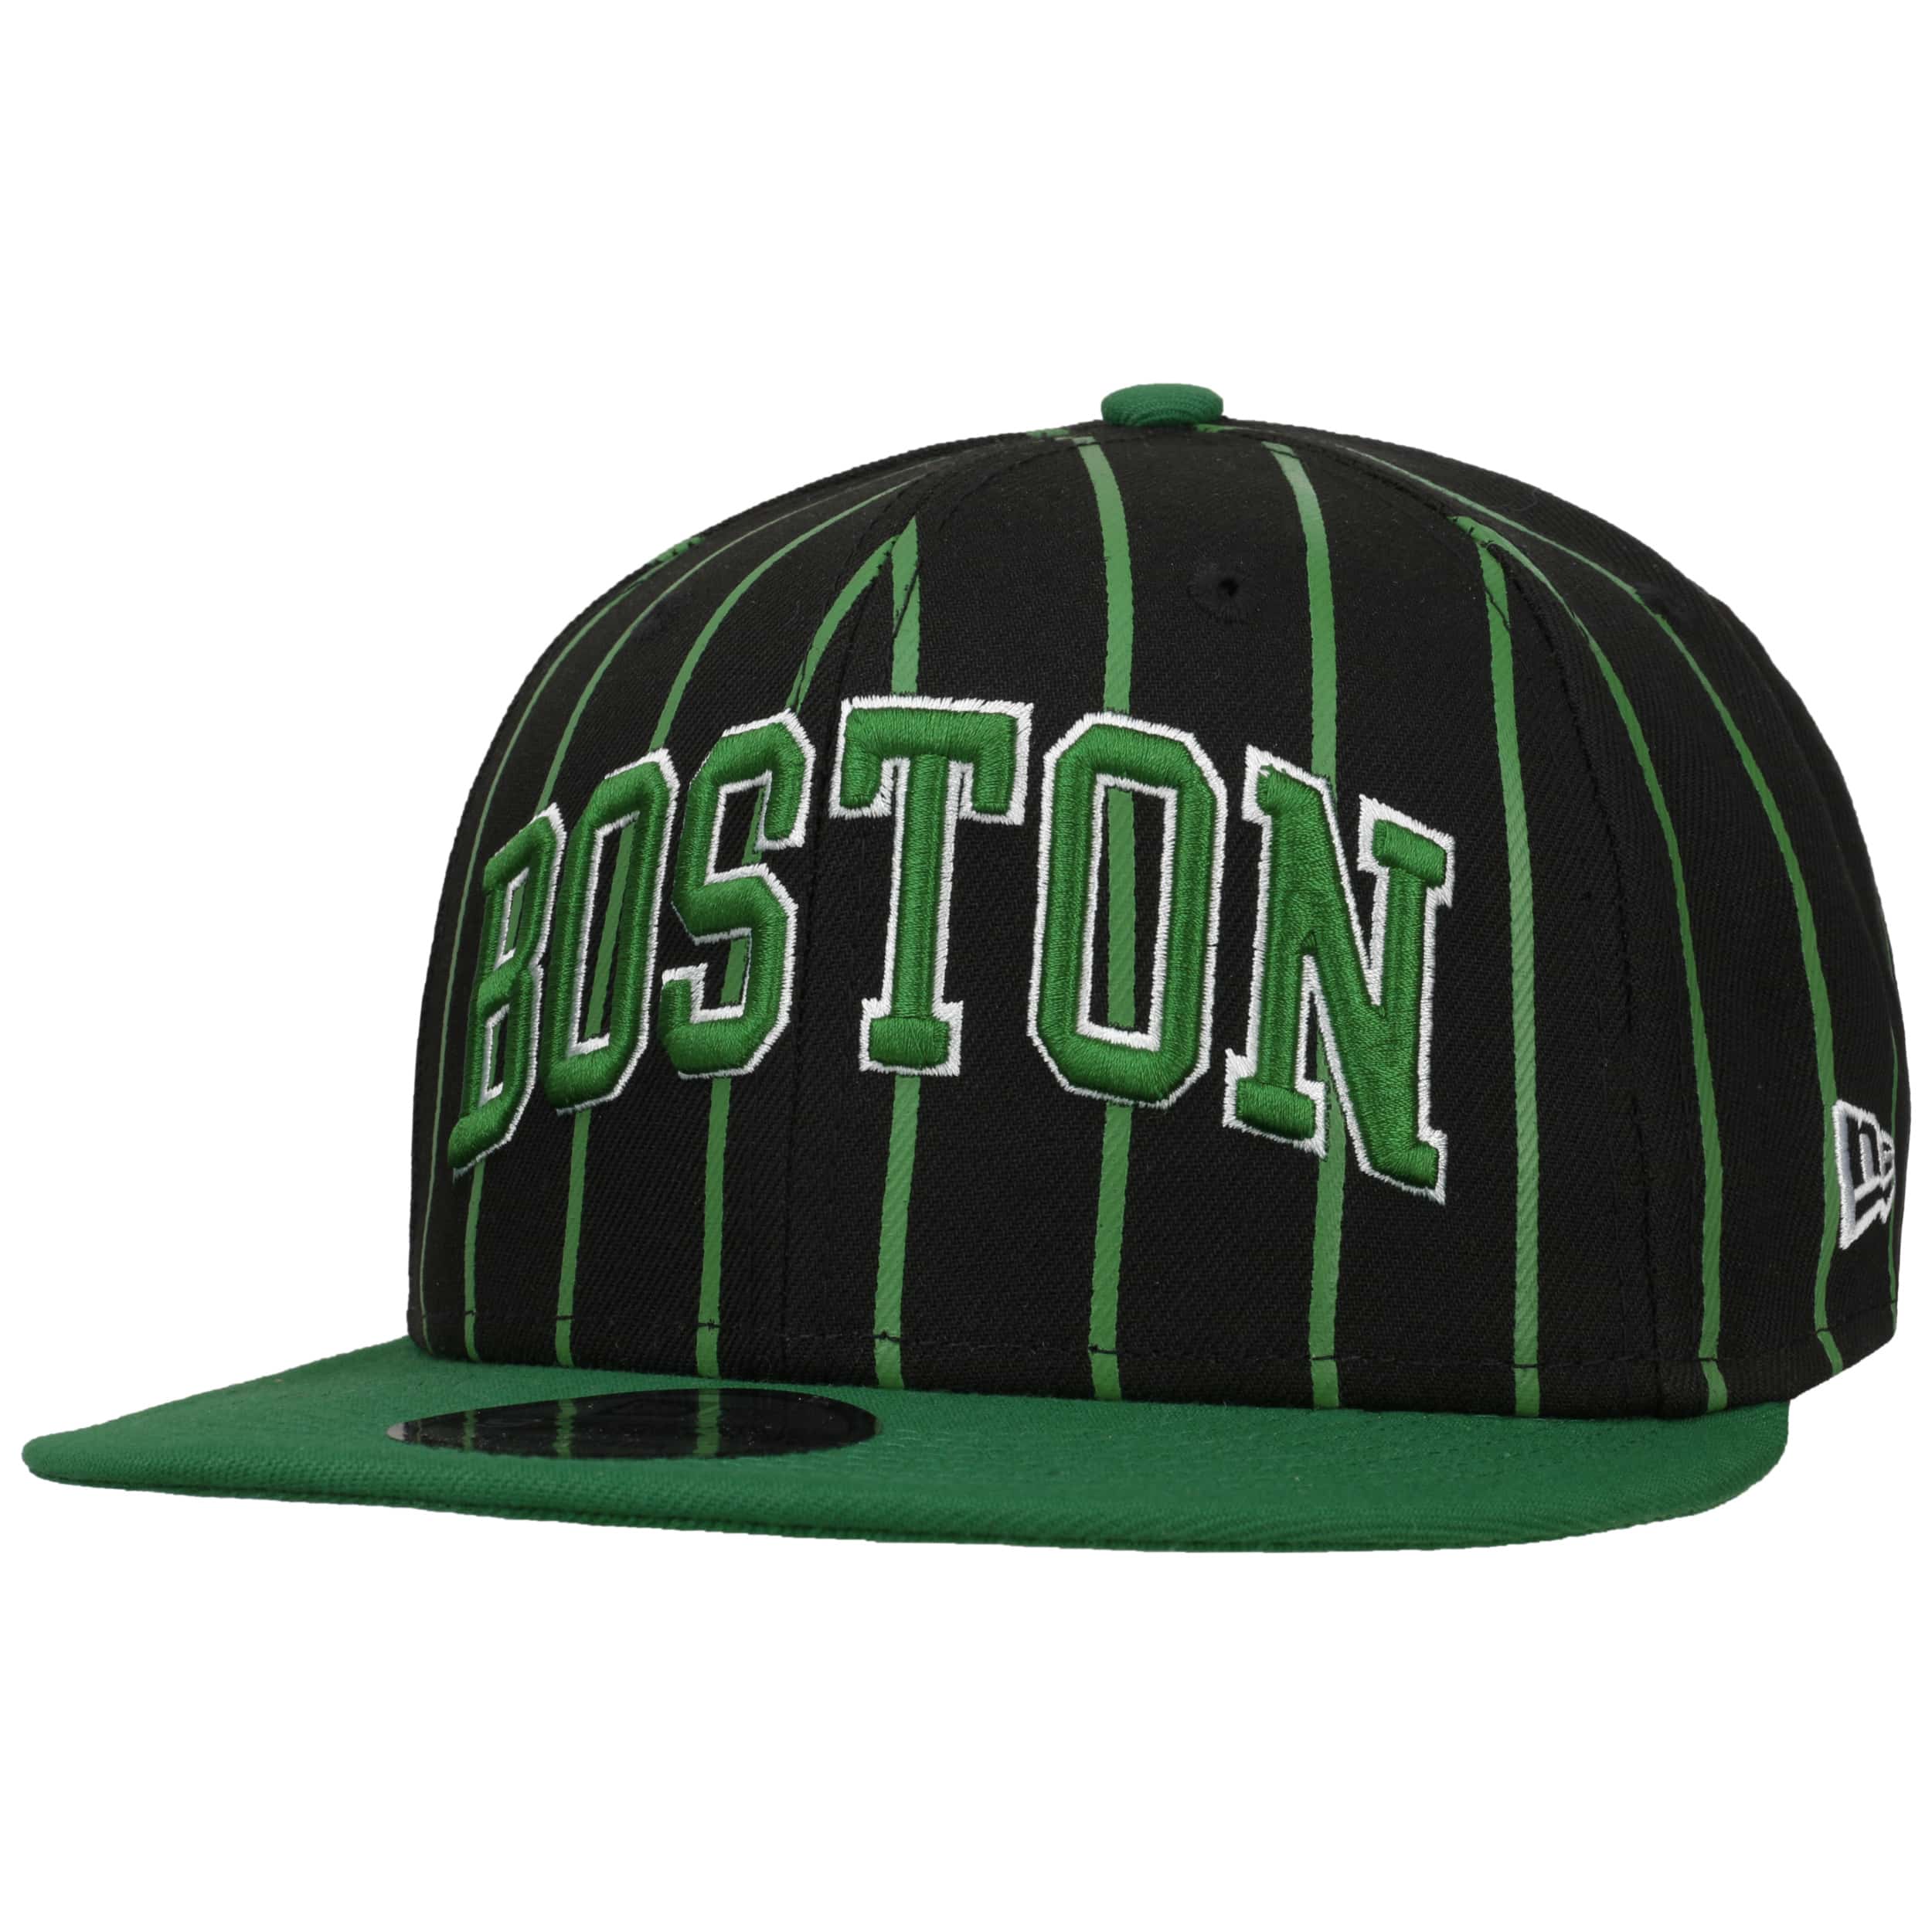 New Era Flat Brim 9FIFTY Boston Celtics NBA Black and Green